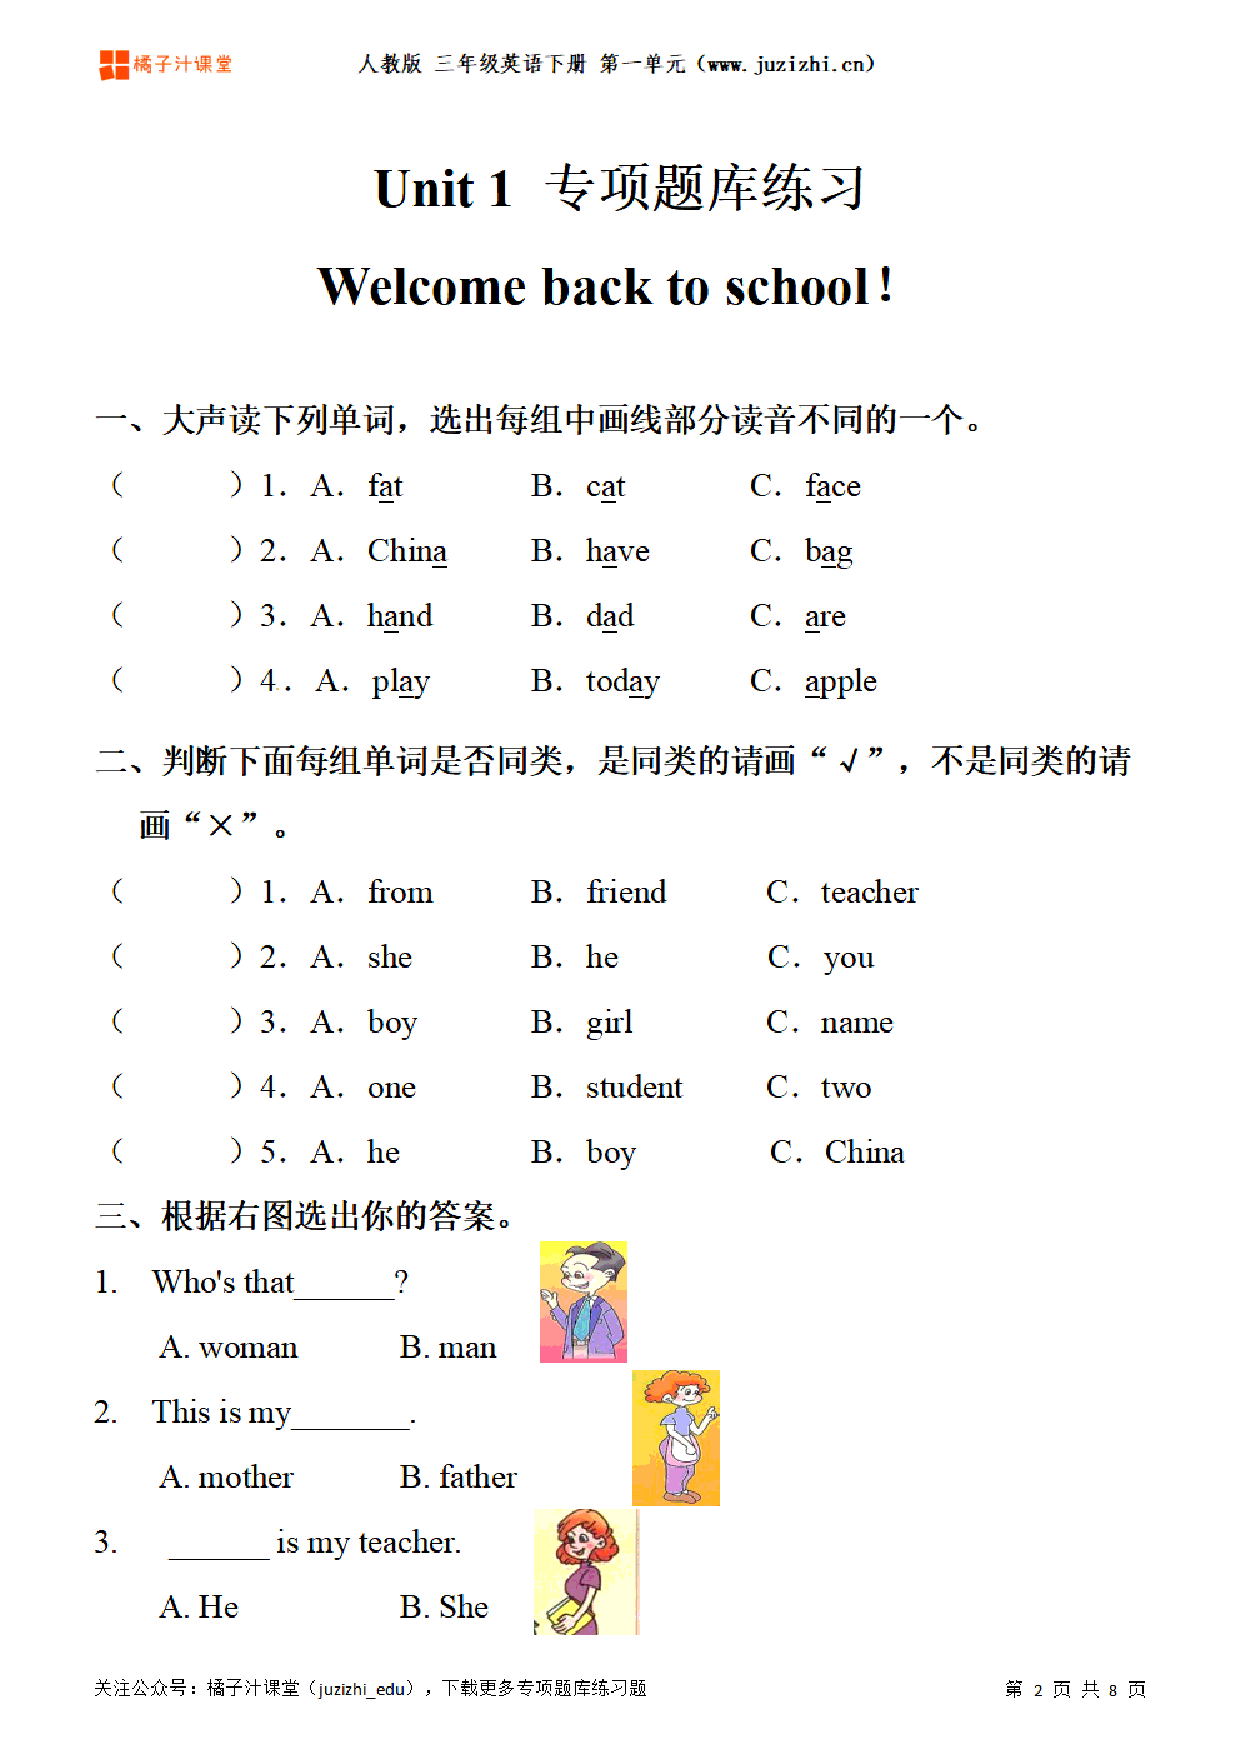 【PEP英语】三年级下册Unit 1《Welcome back to school！》专项题库练习